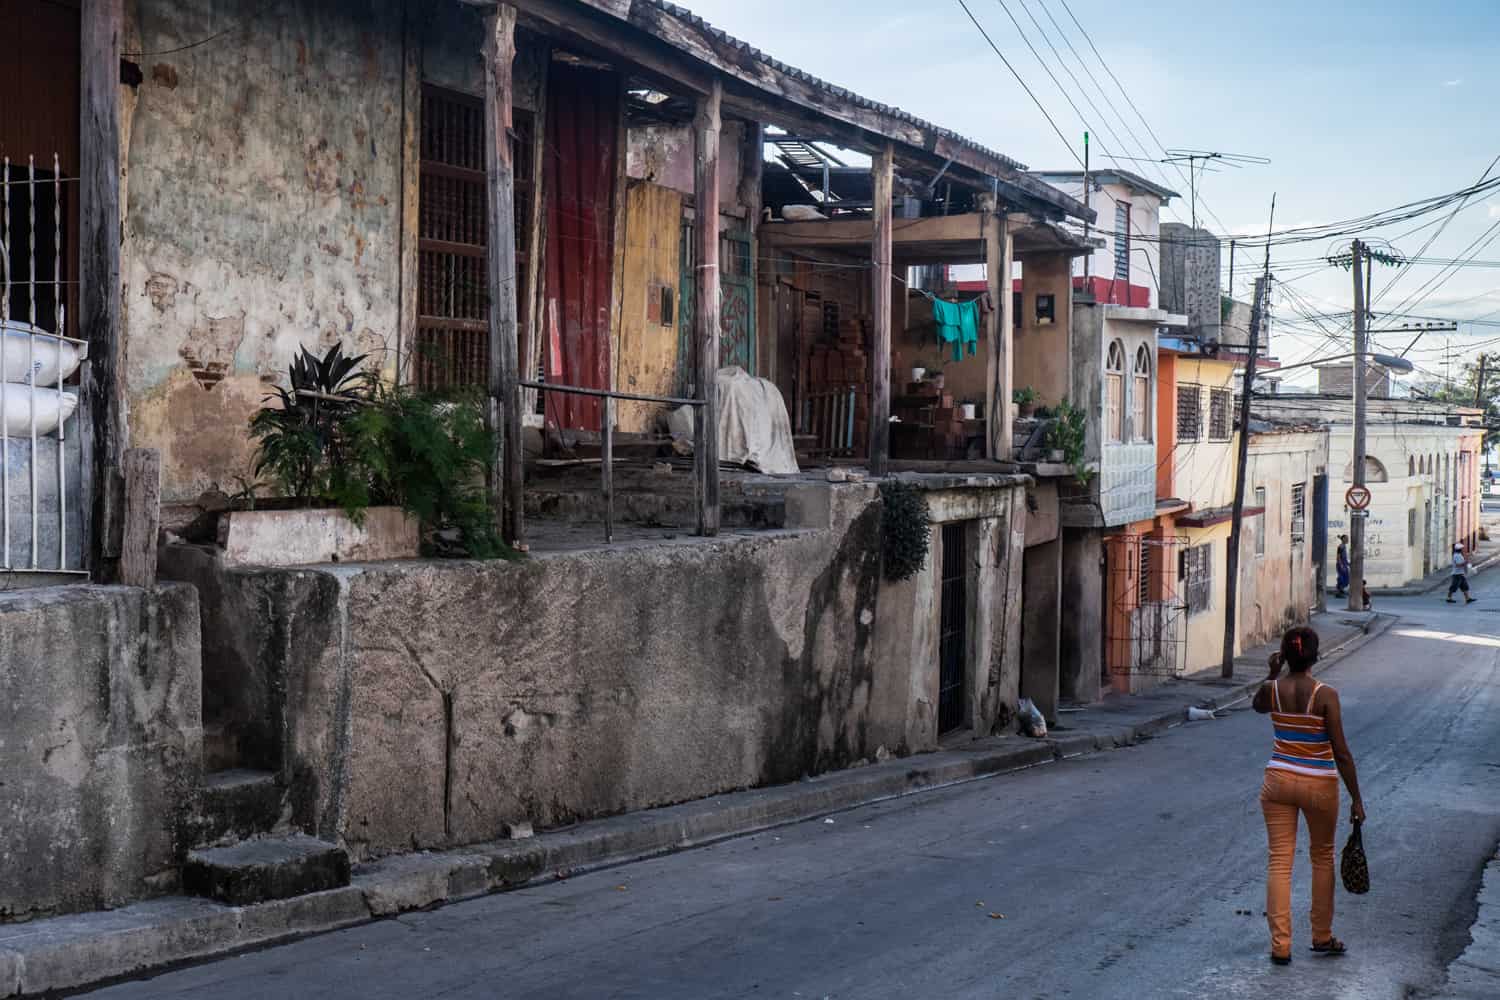 A woman walks down a neighbourhood street with low rise, run-down buildings in Cuba. 